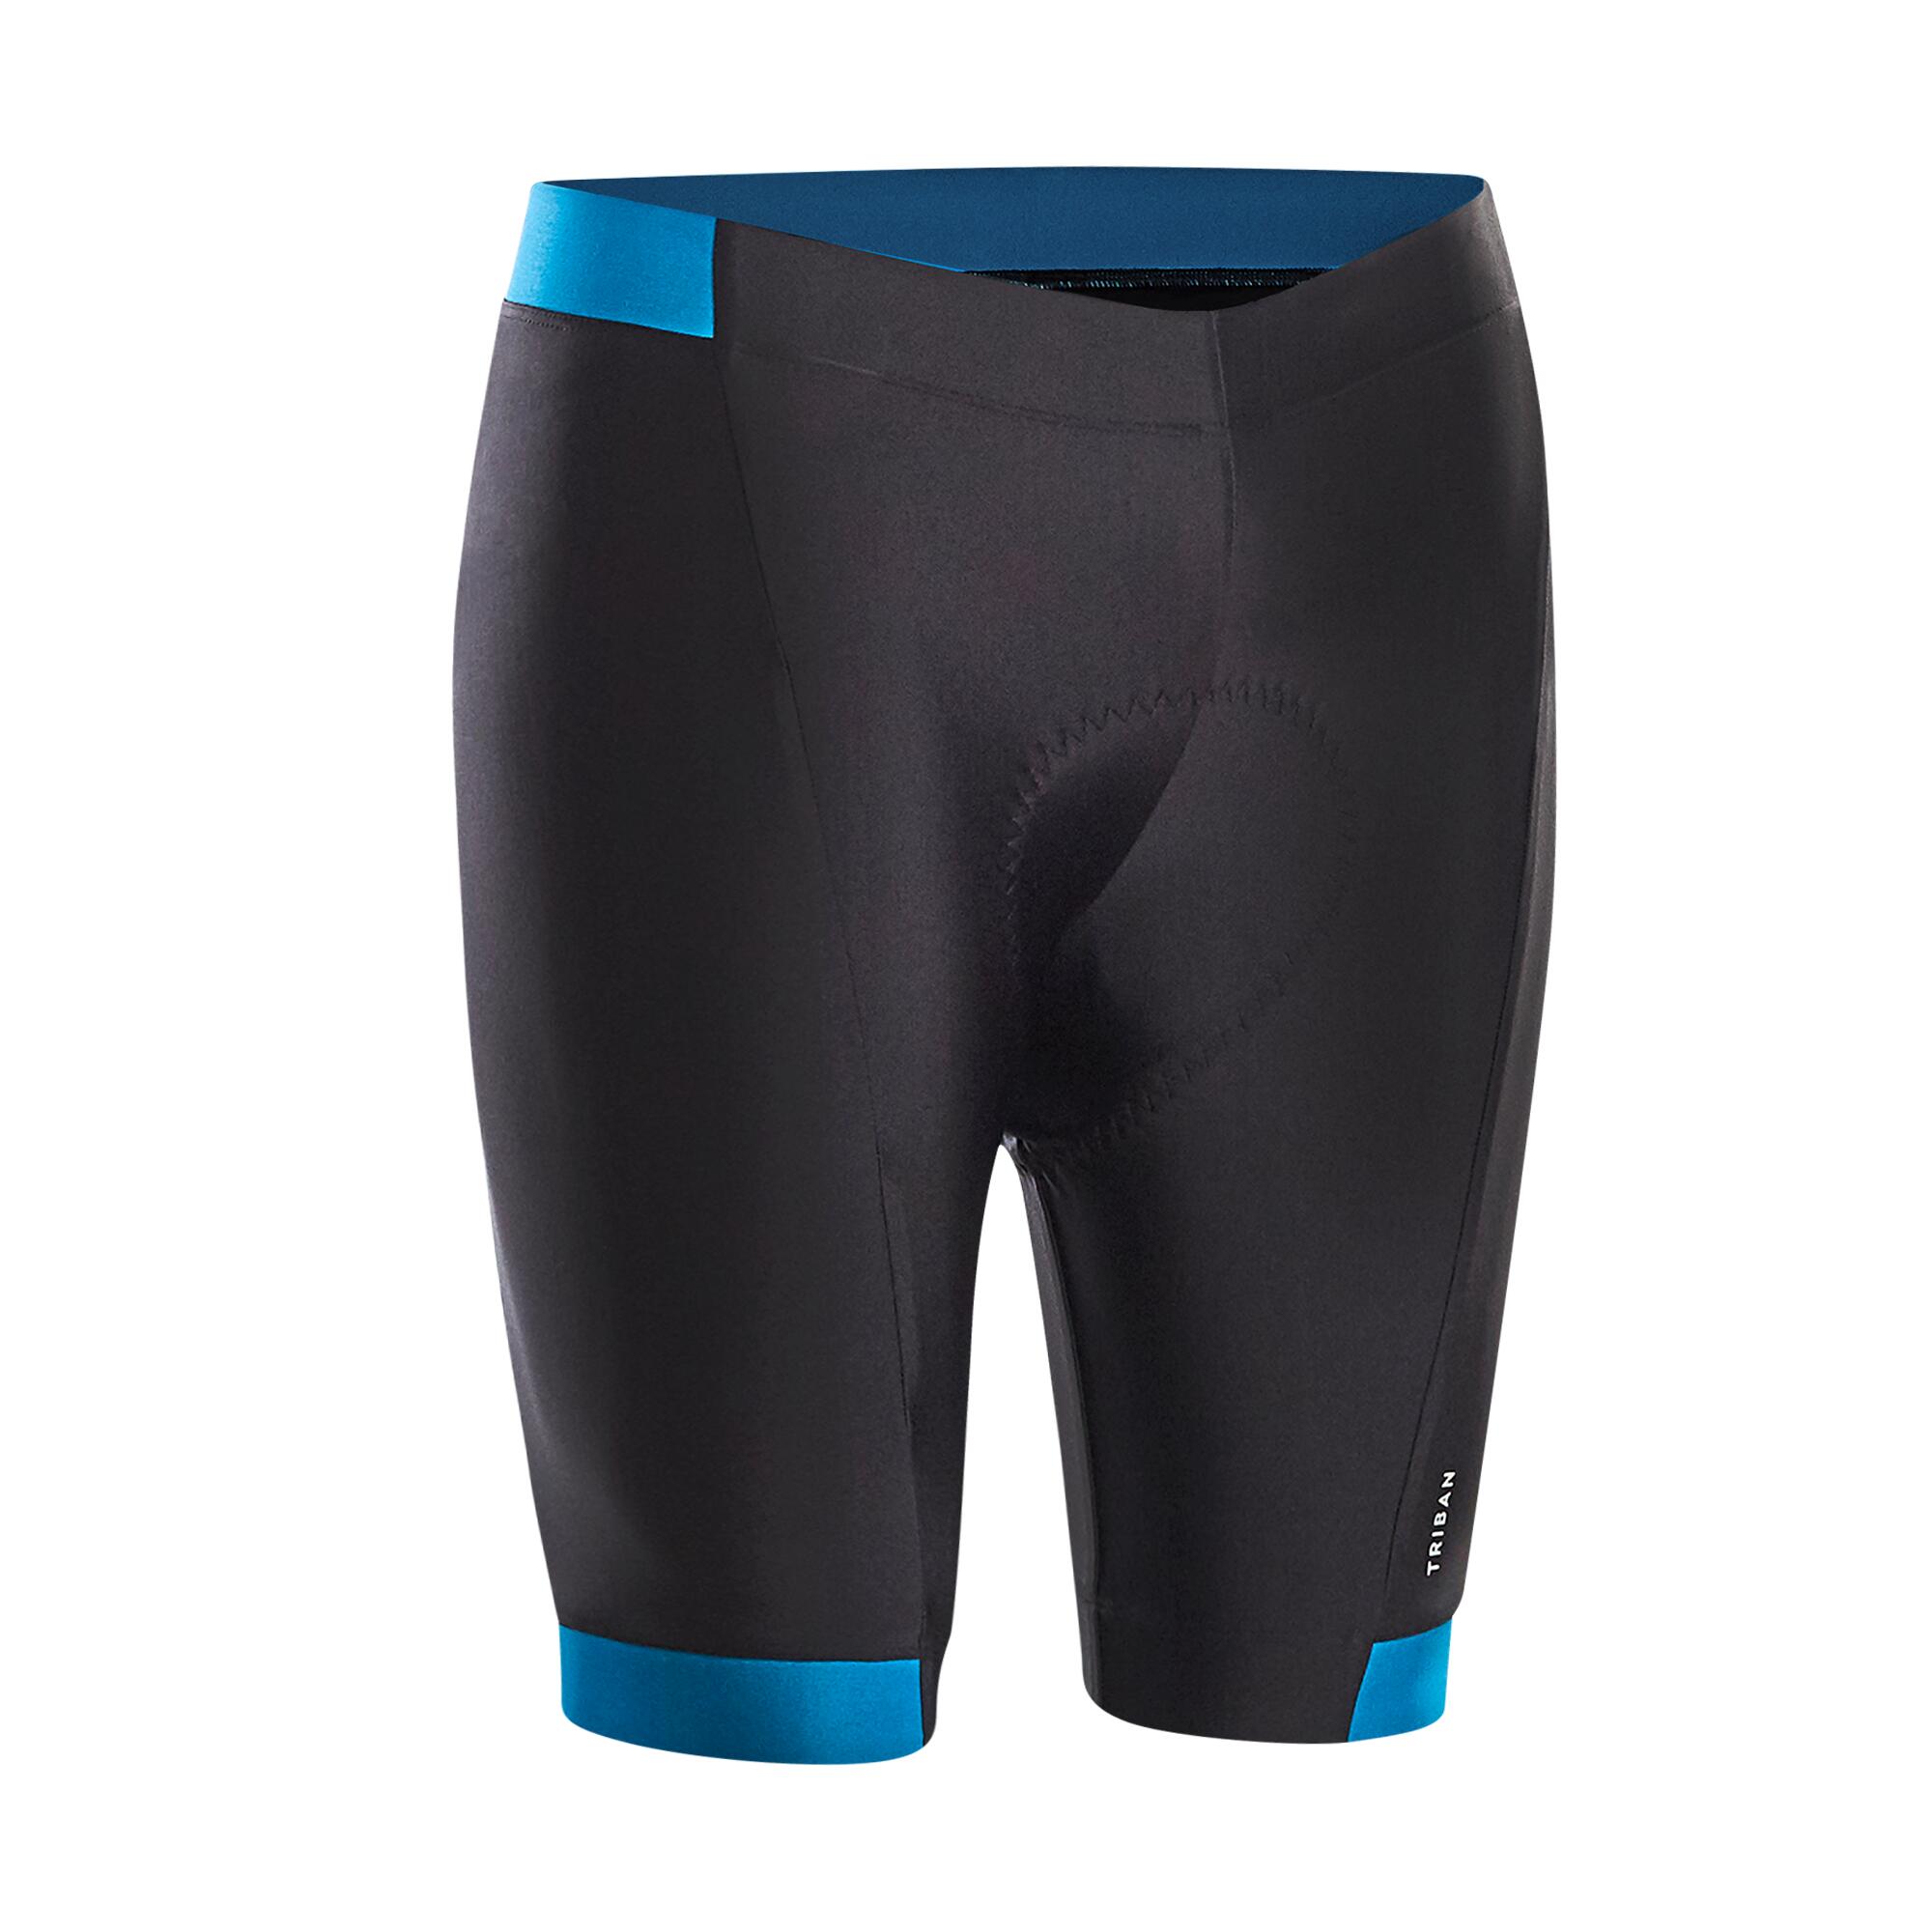 RC 100 cycling bib shorts - Men - black, black - Van rysel - Decathlon